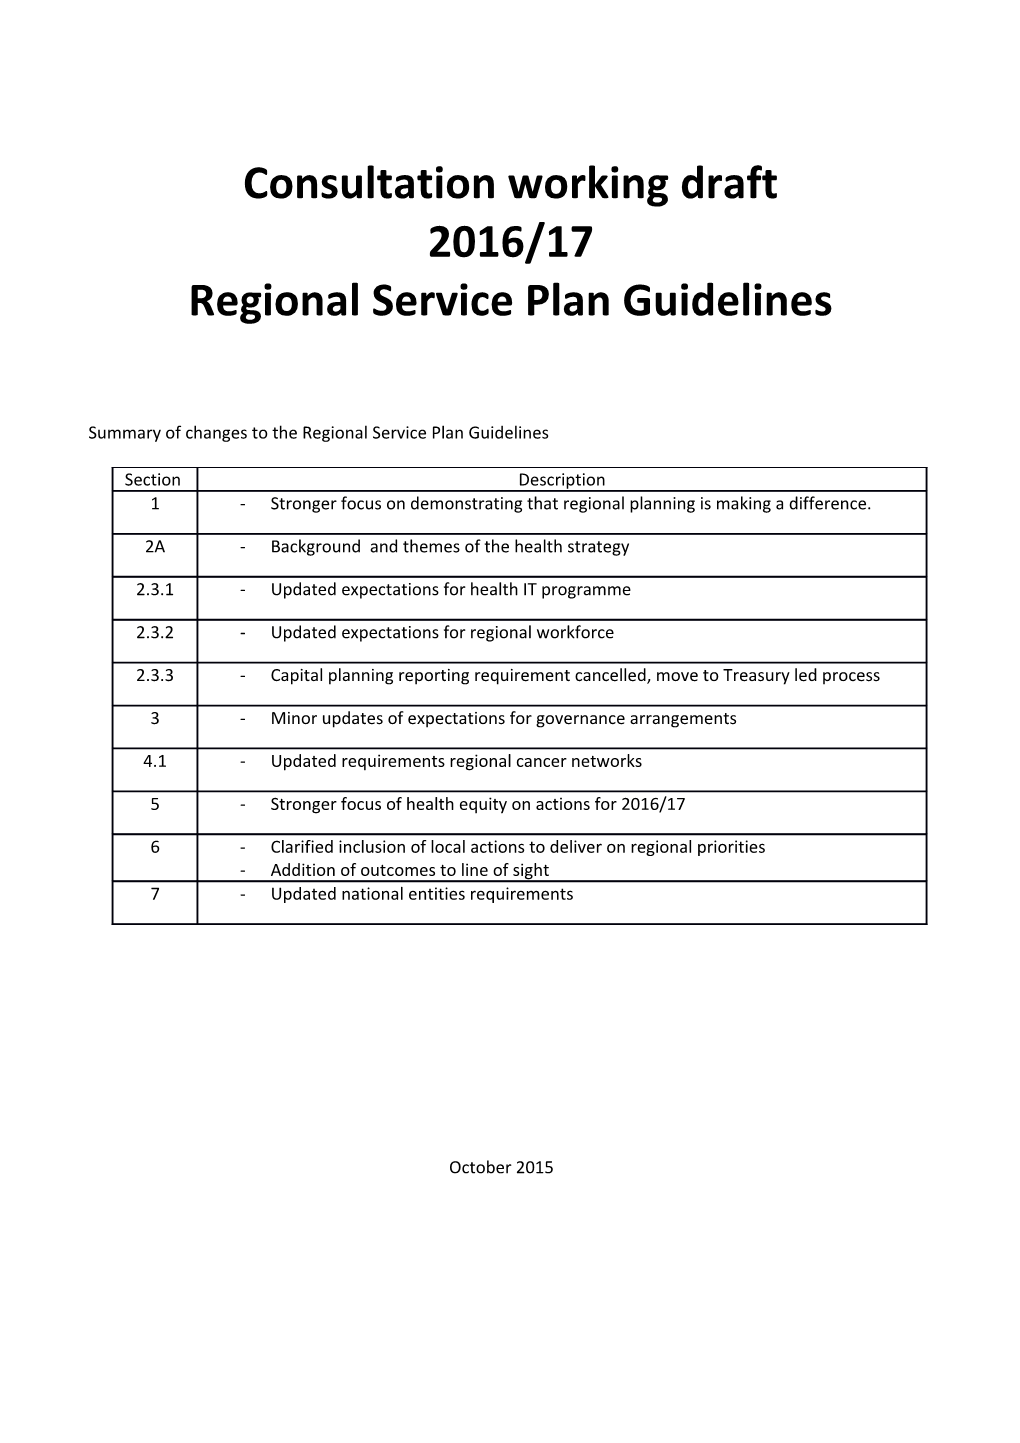 Regional Service Plan Guidelines